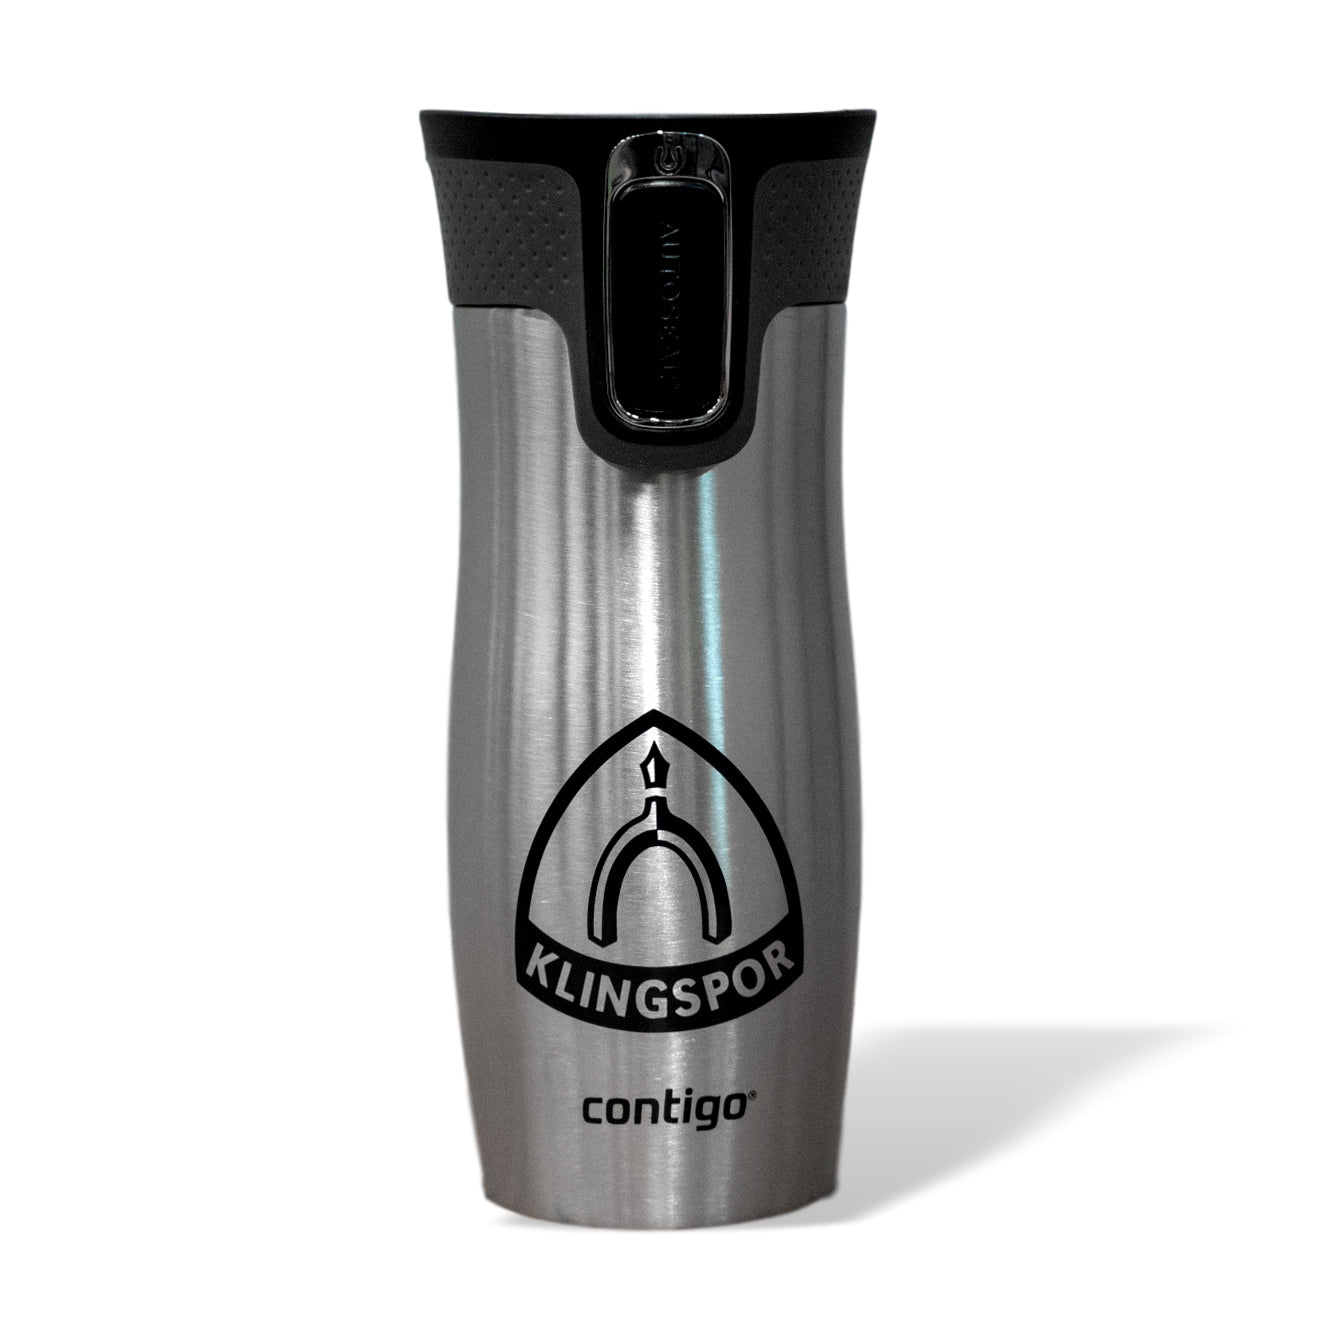 Contigo Stainless Steel Water Bottle W/ Travel Mug